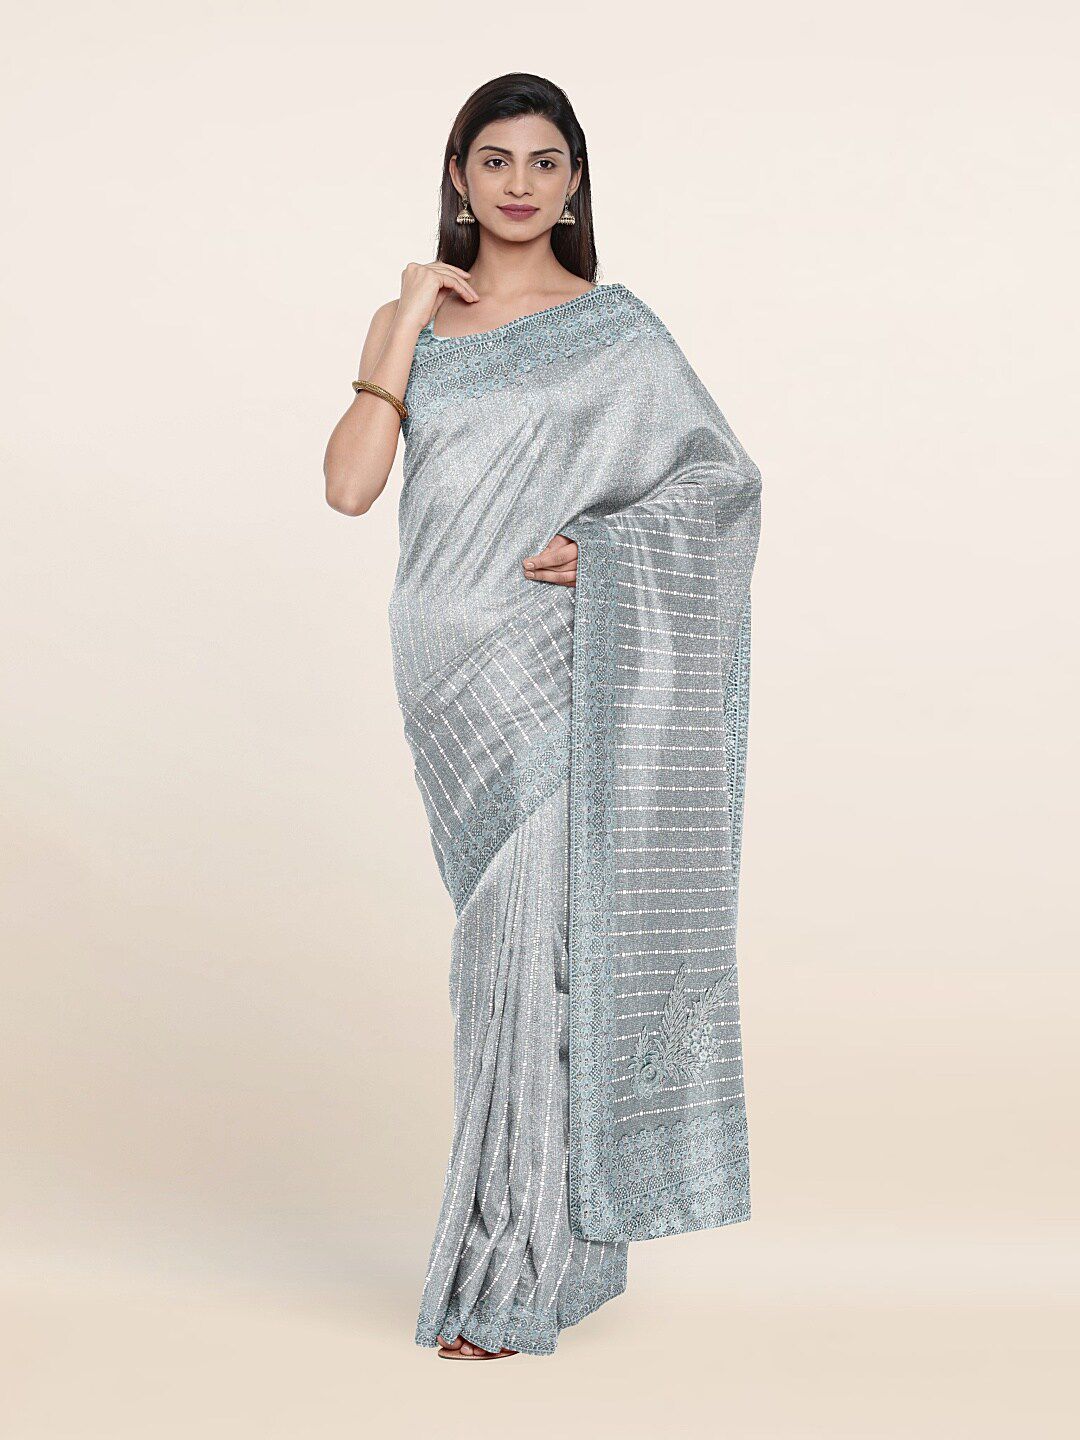 Pothys Blue Striped Saree Price in India